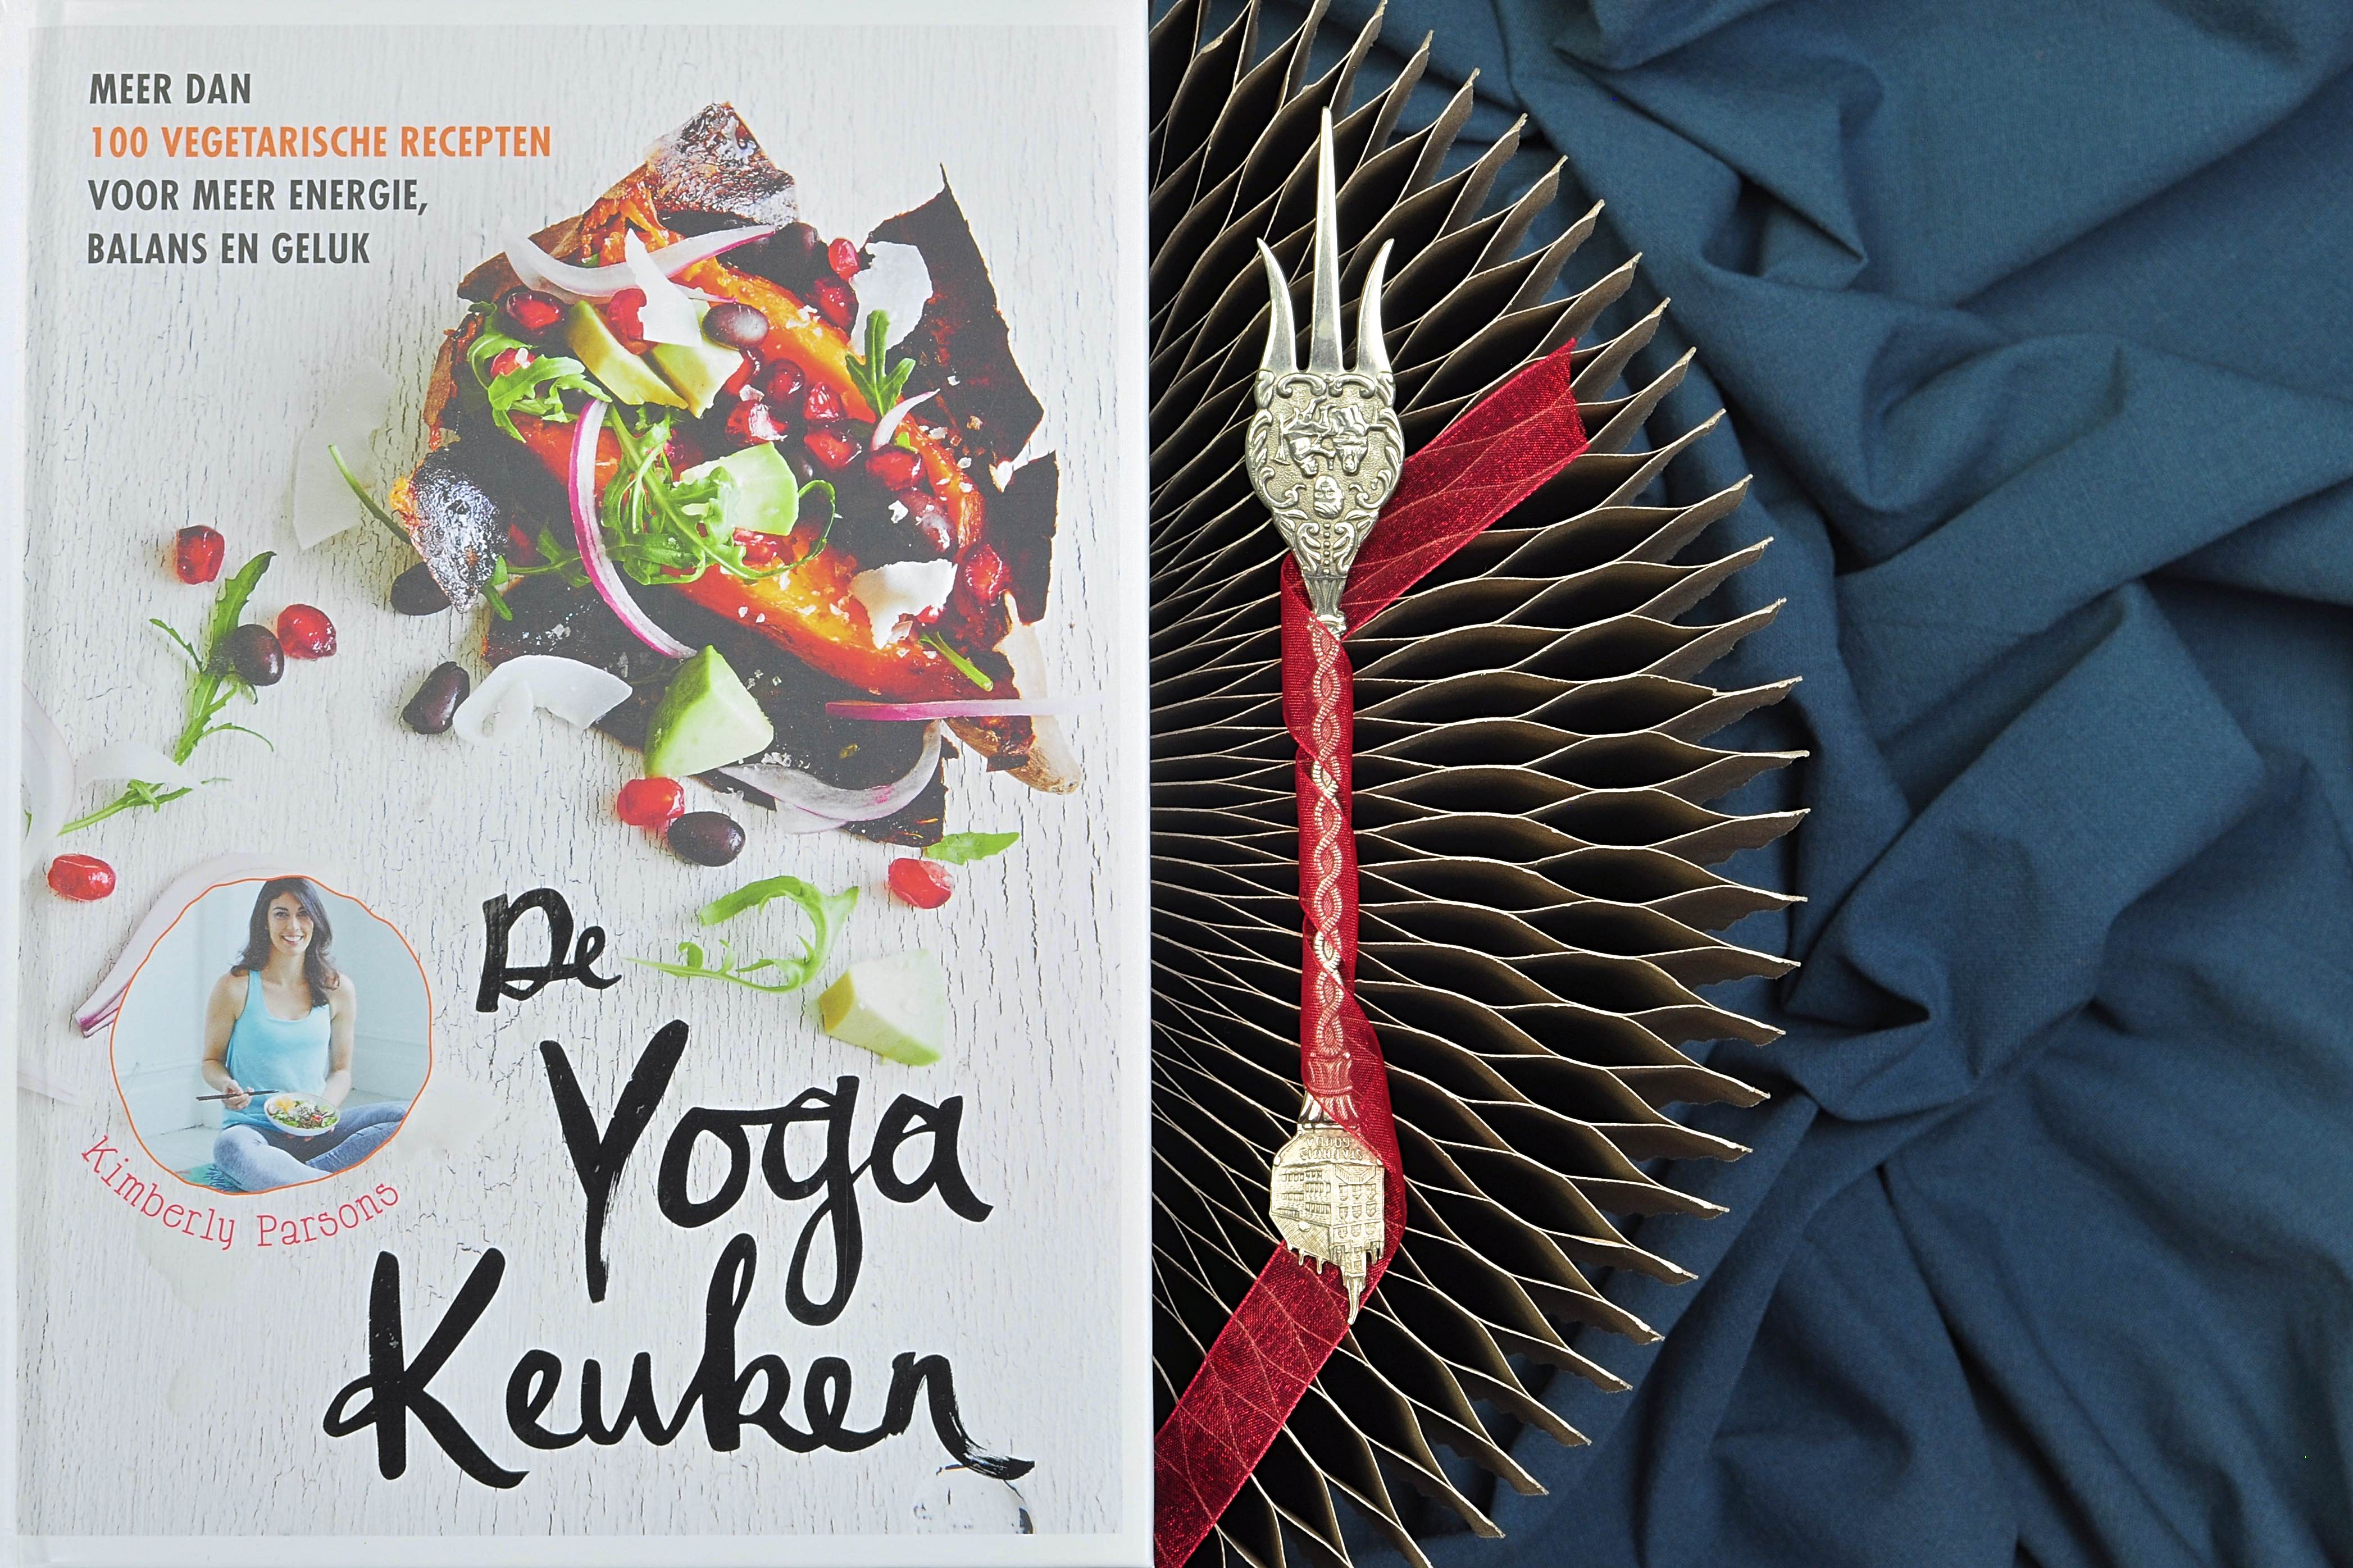 De_yoga_keuken_unieboek